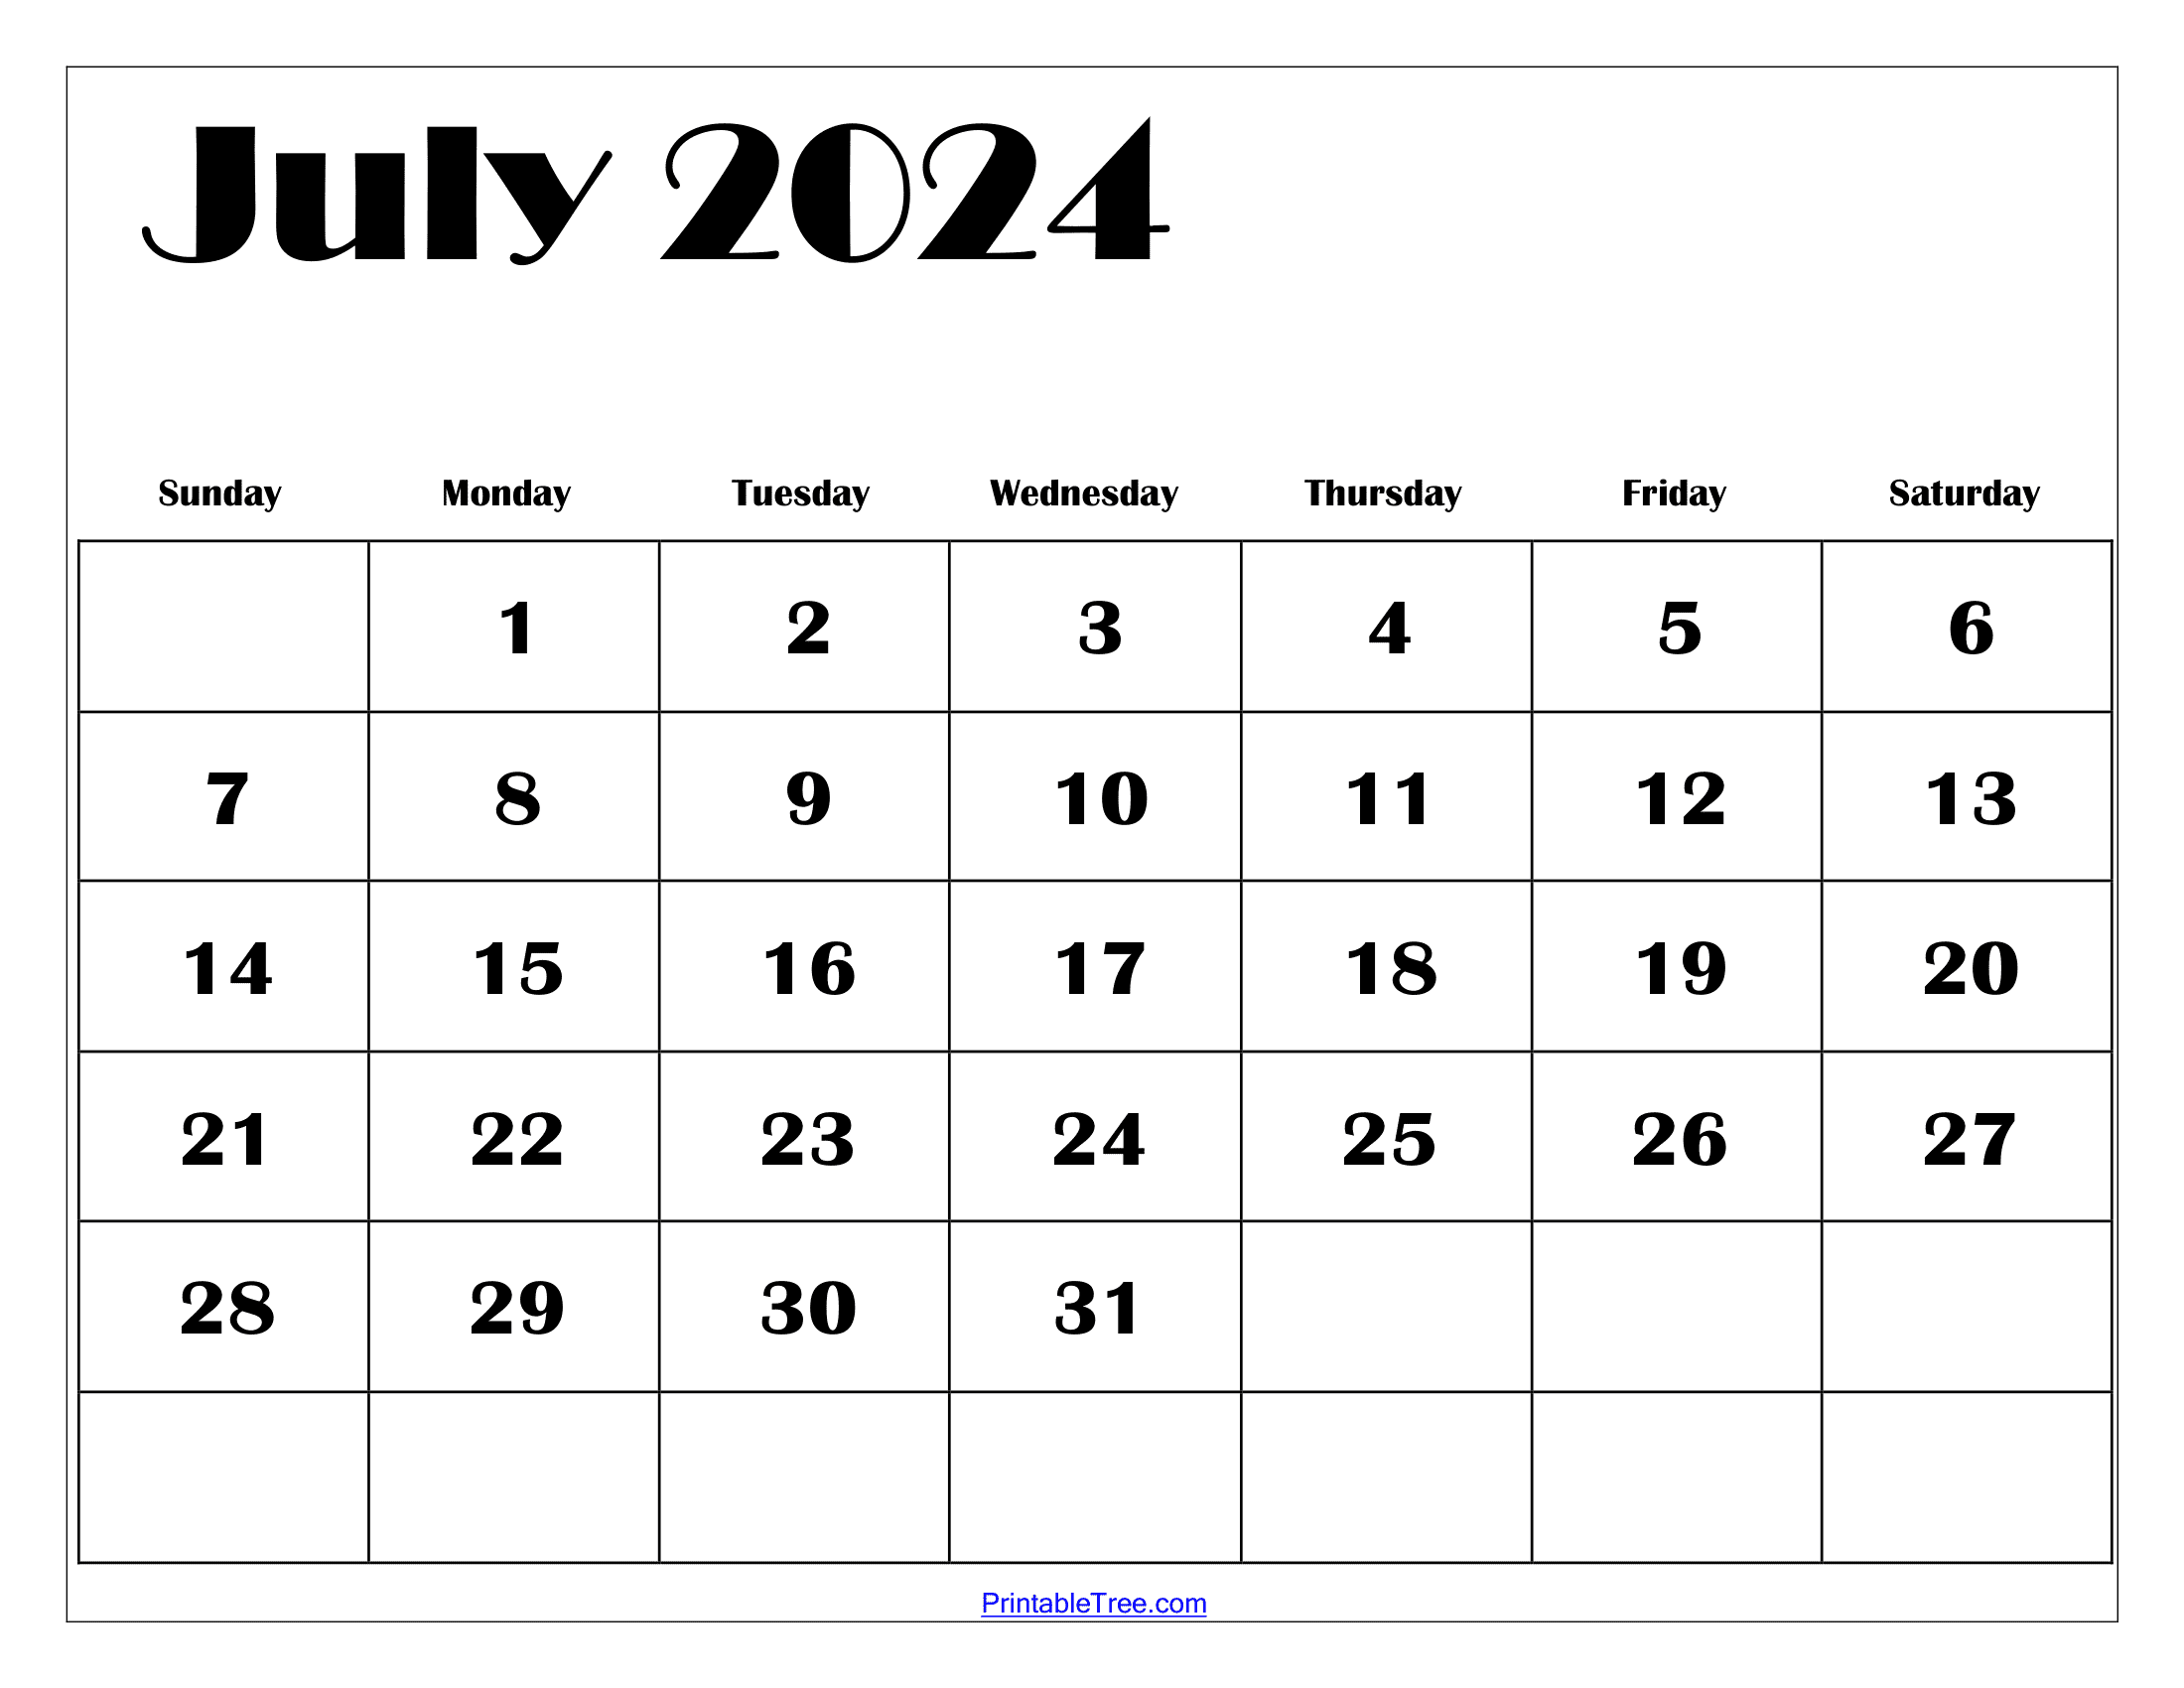 July 2024 Calendar Printable Pdf With Holidays Free Template for July 2024 Calendar Printable Free